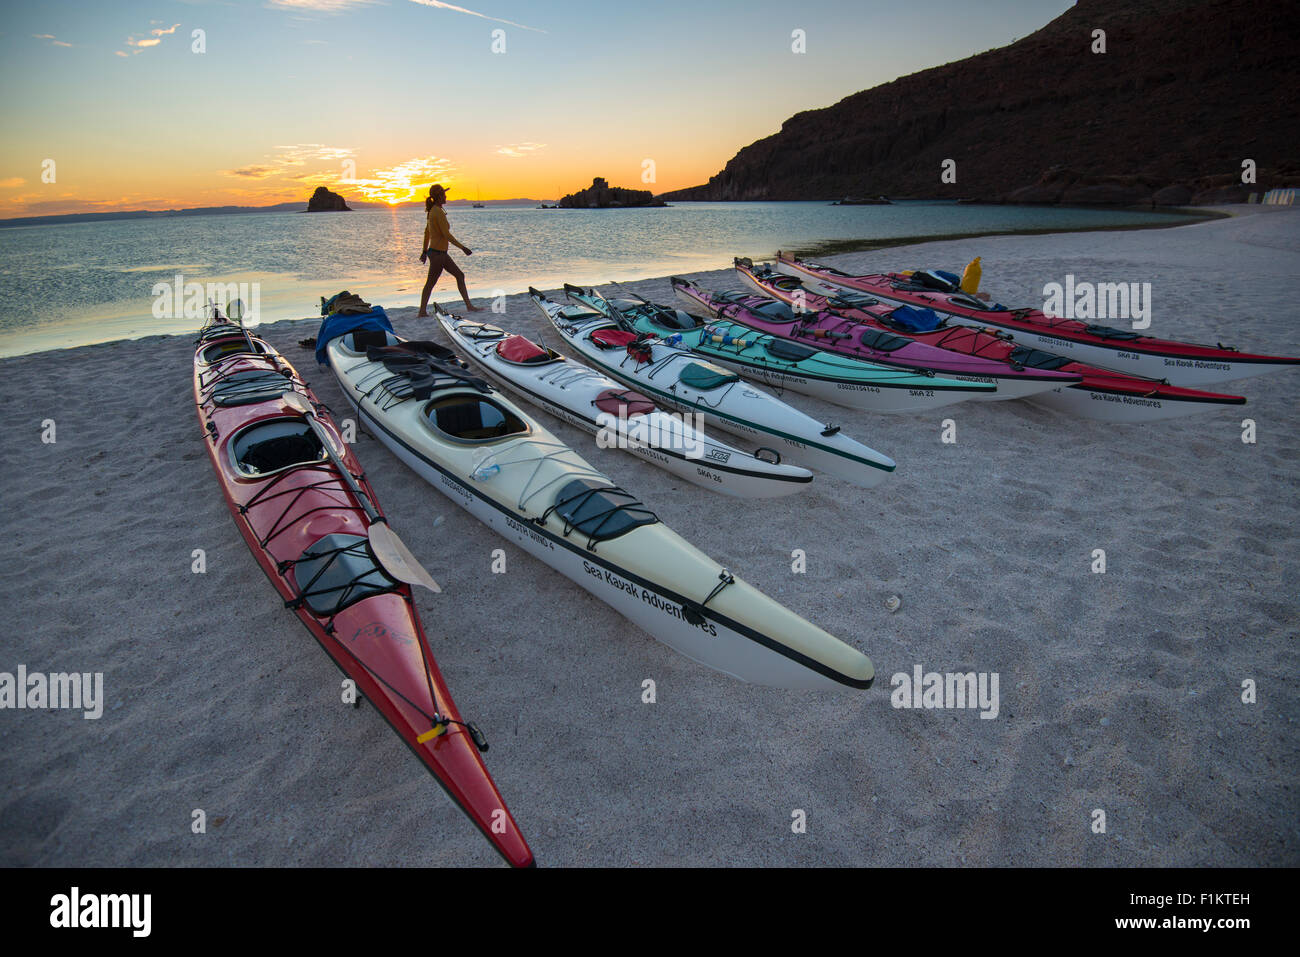 Mexico, Baja, Lapaz, Espiritu Santo. Woman standing near kayaks during sunset. Stock Photo